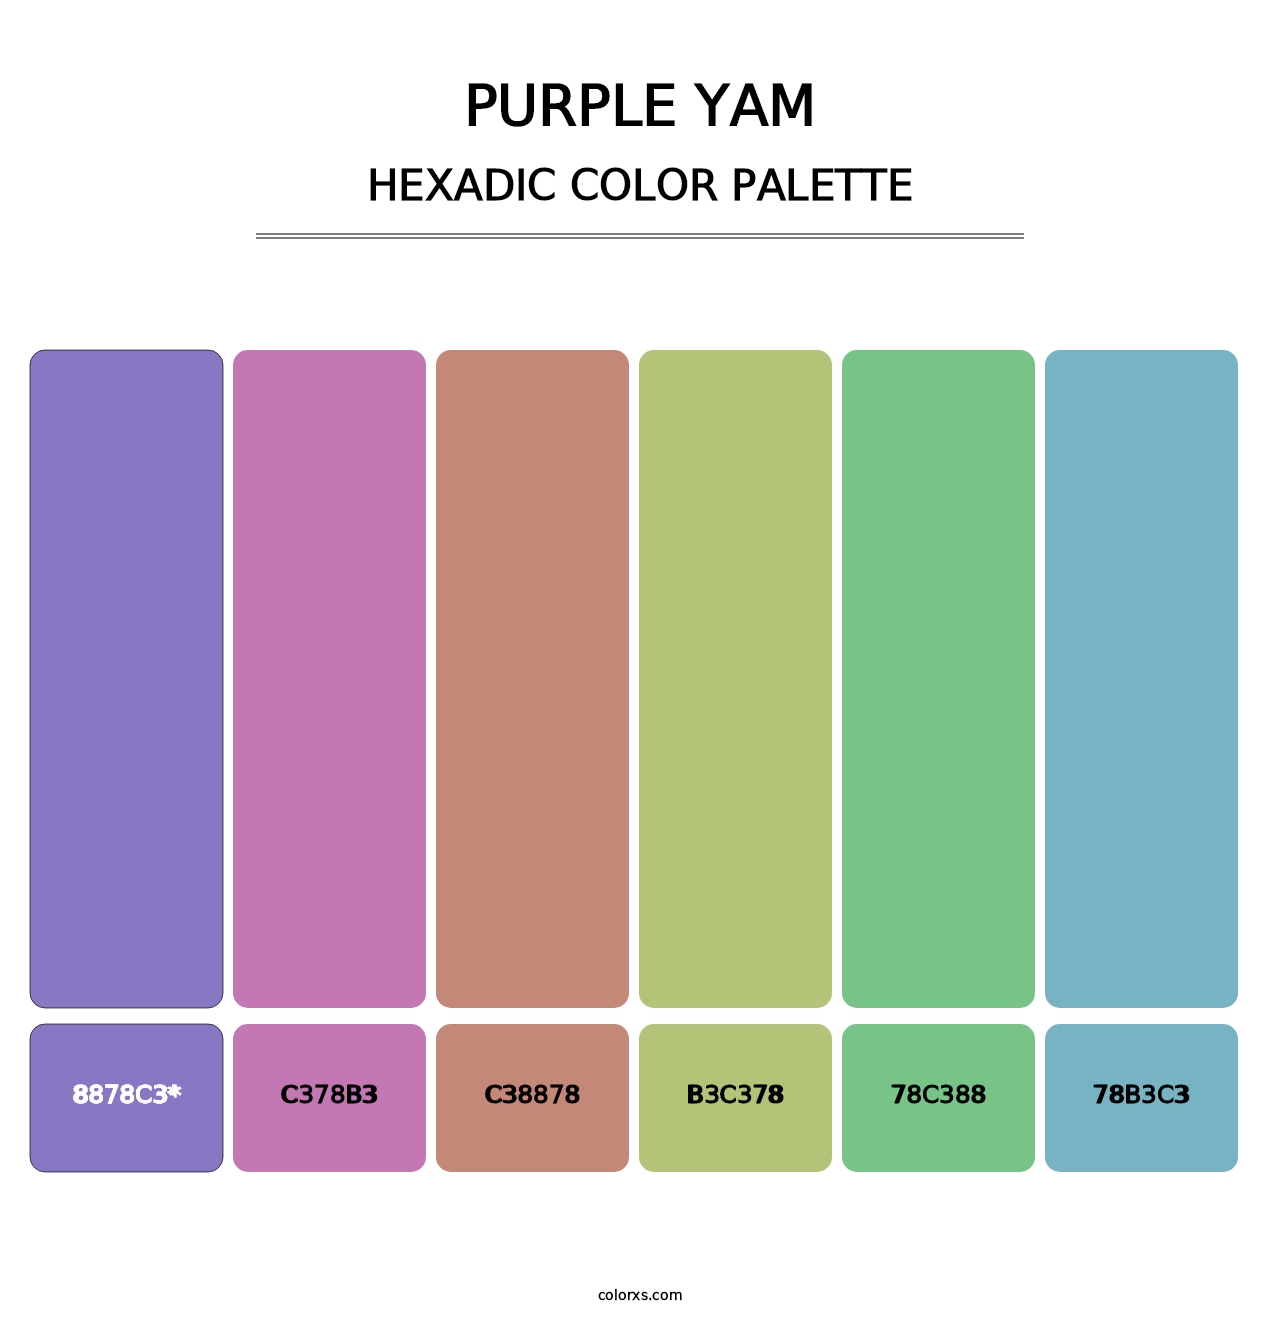 Purple Yam - Hexadic Color Palette